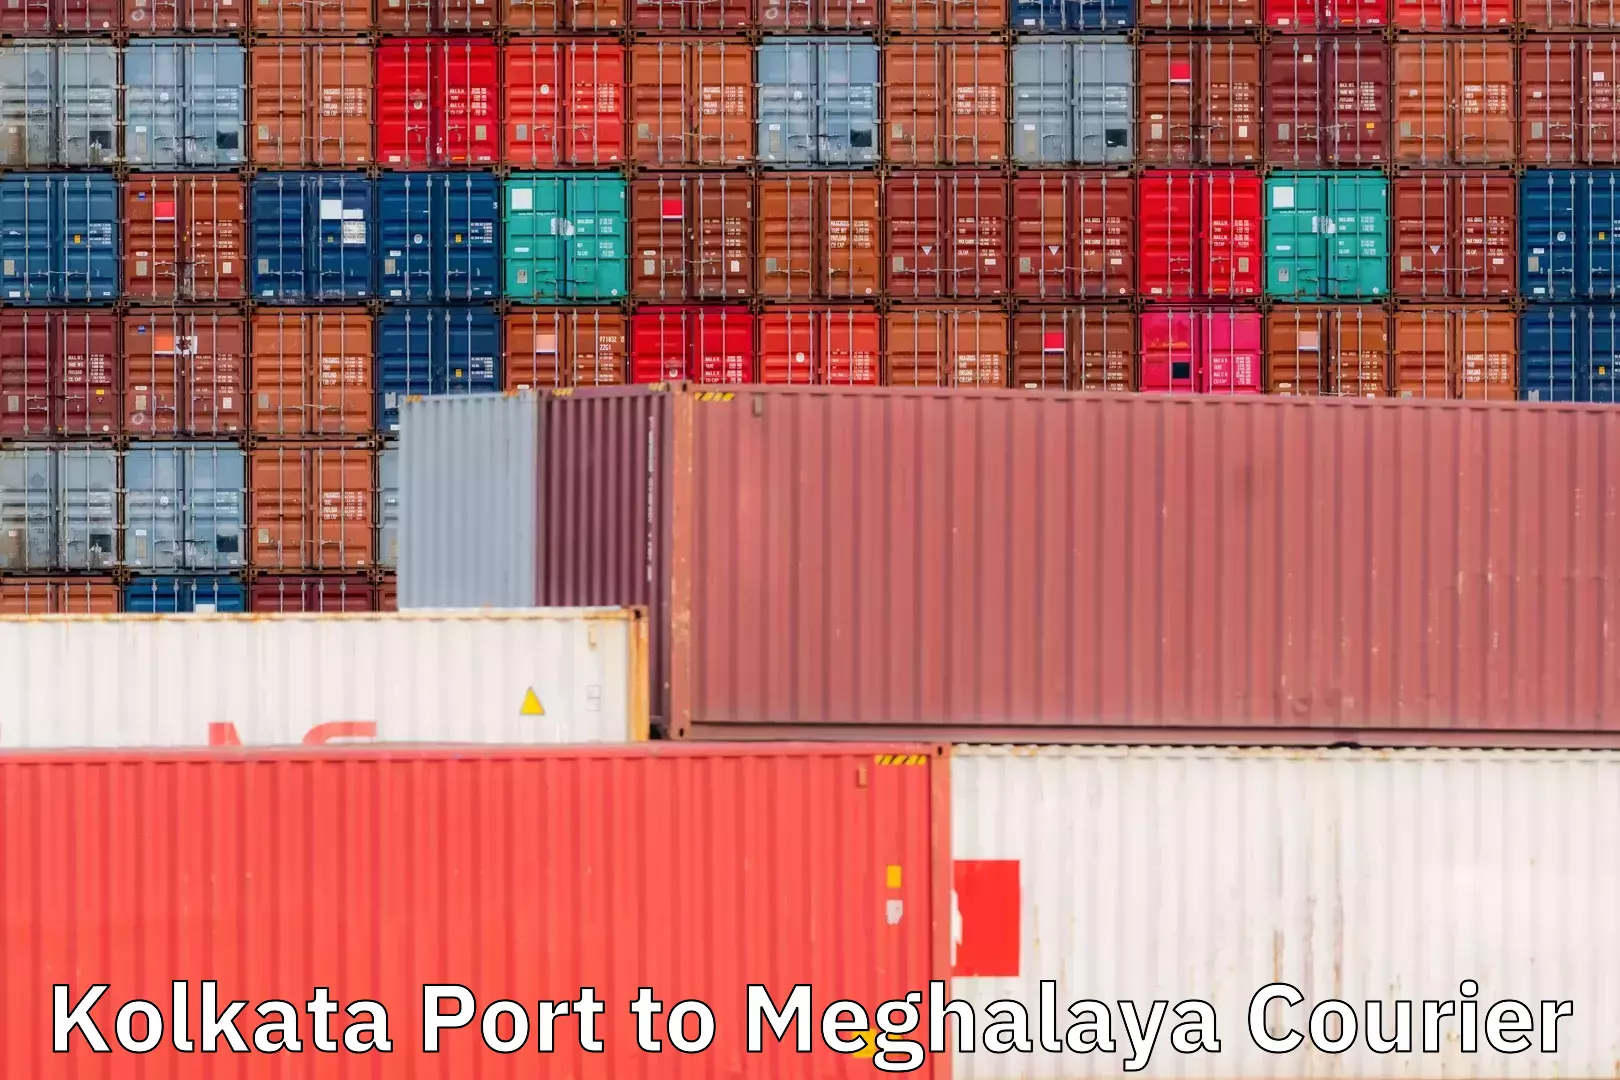 Courier service partnerships Kolkata Port to Jaintia Hills